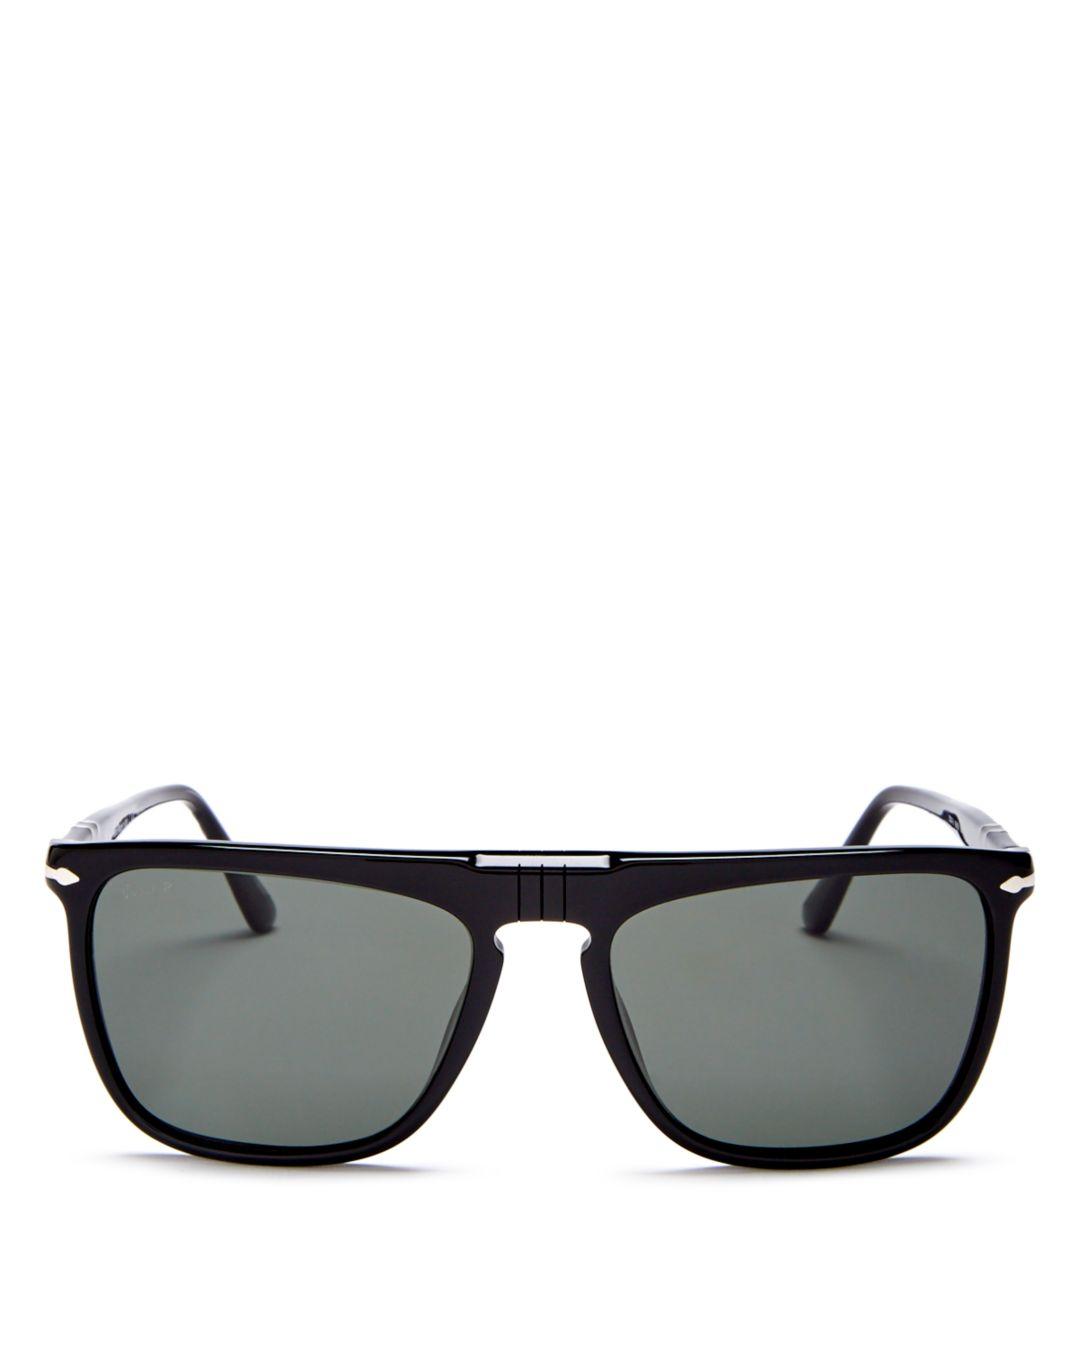 Persol Men S Polarized Square Sunglasses In Black For Men Lyst